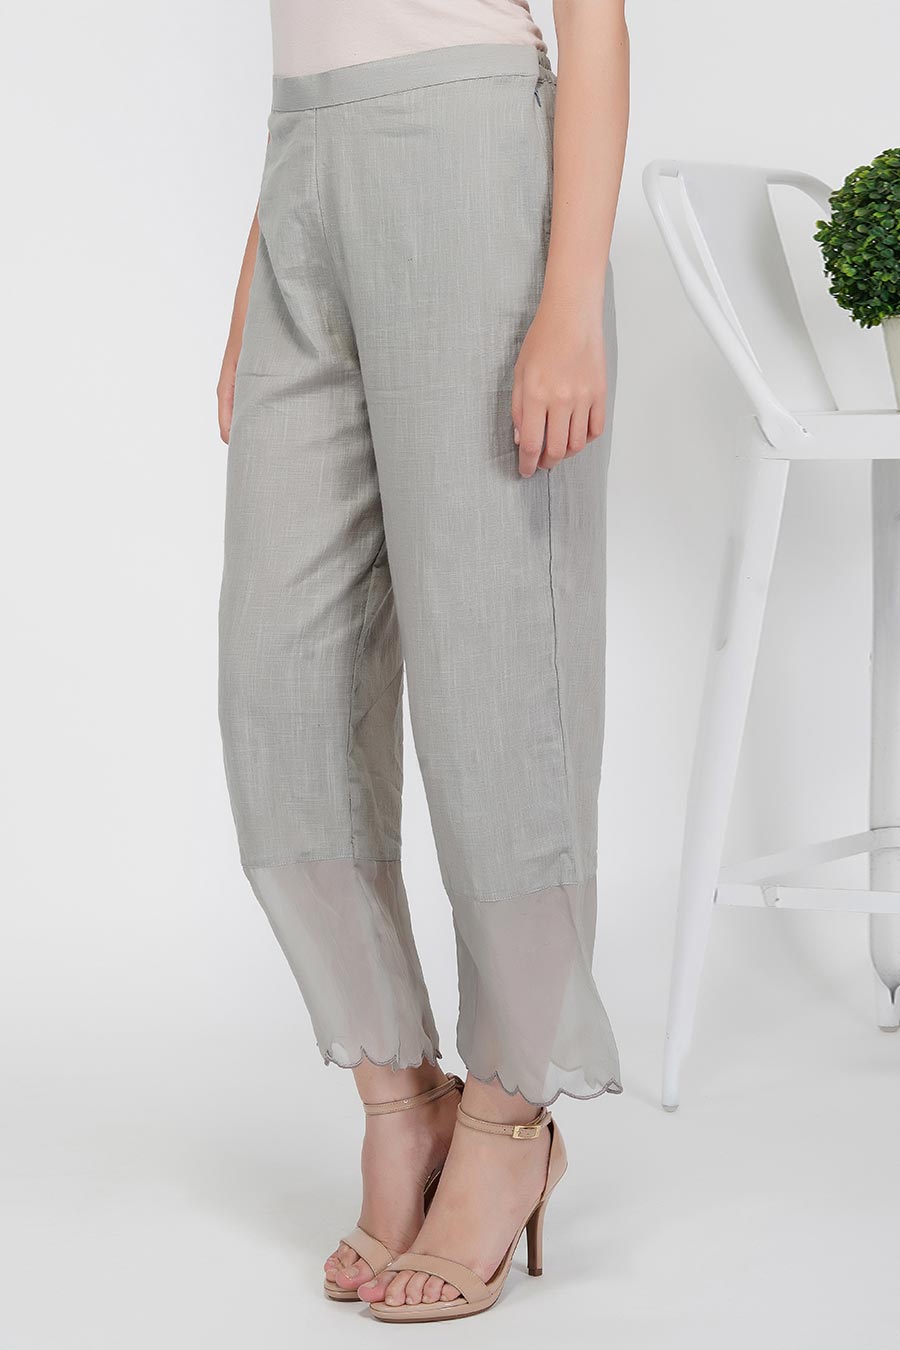 Grey Scallop Hemline Pants